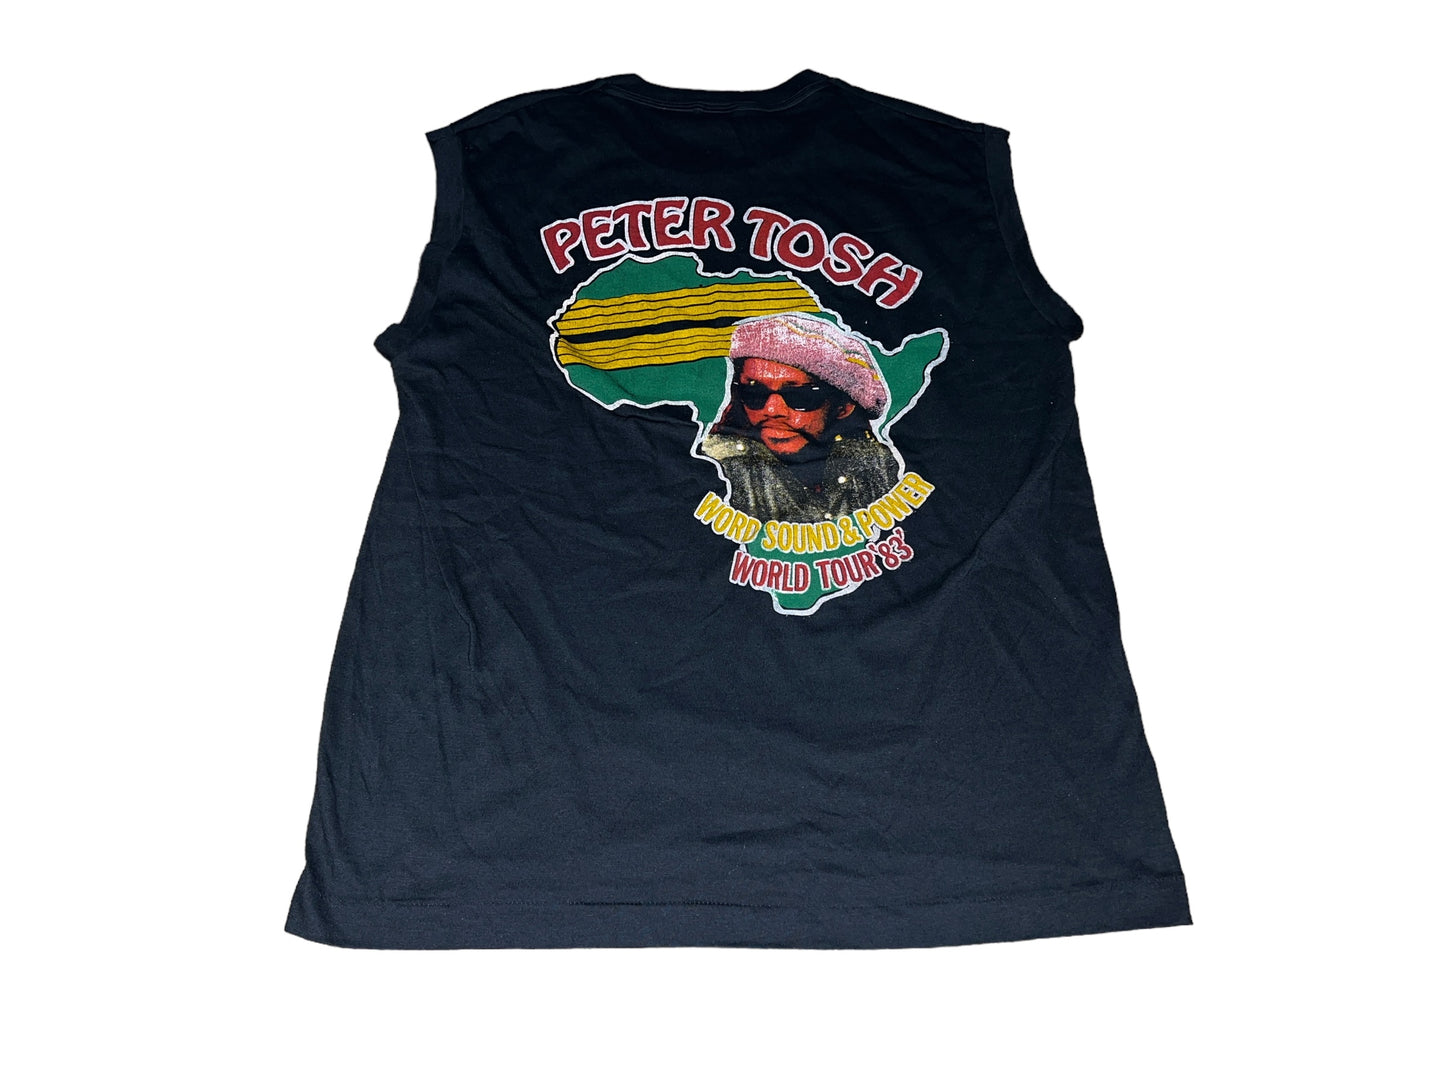 Vintage 1983 Peter Tosh Shirt